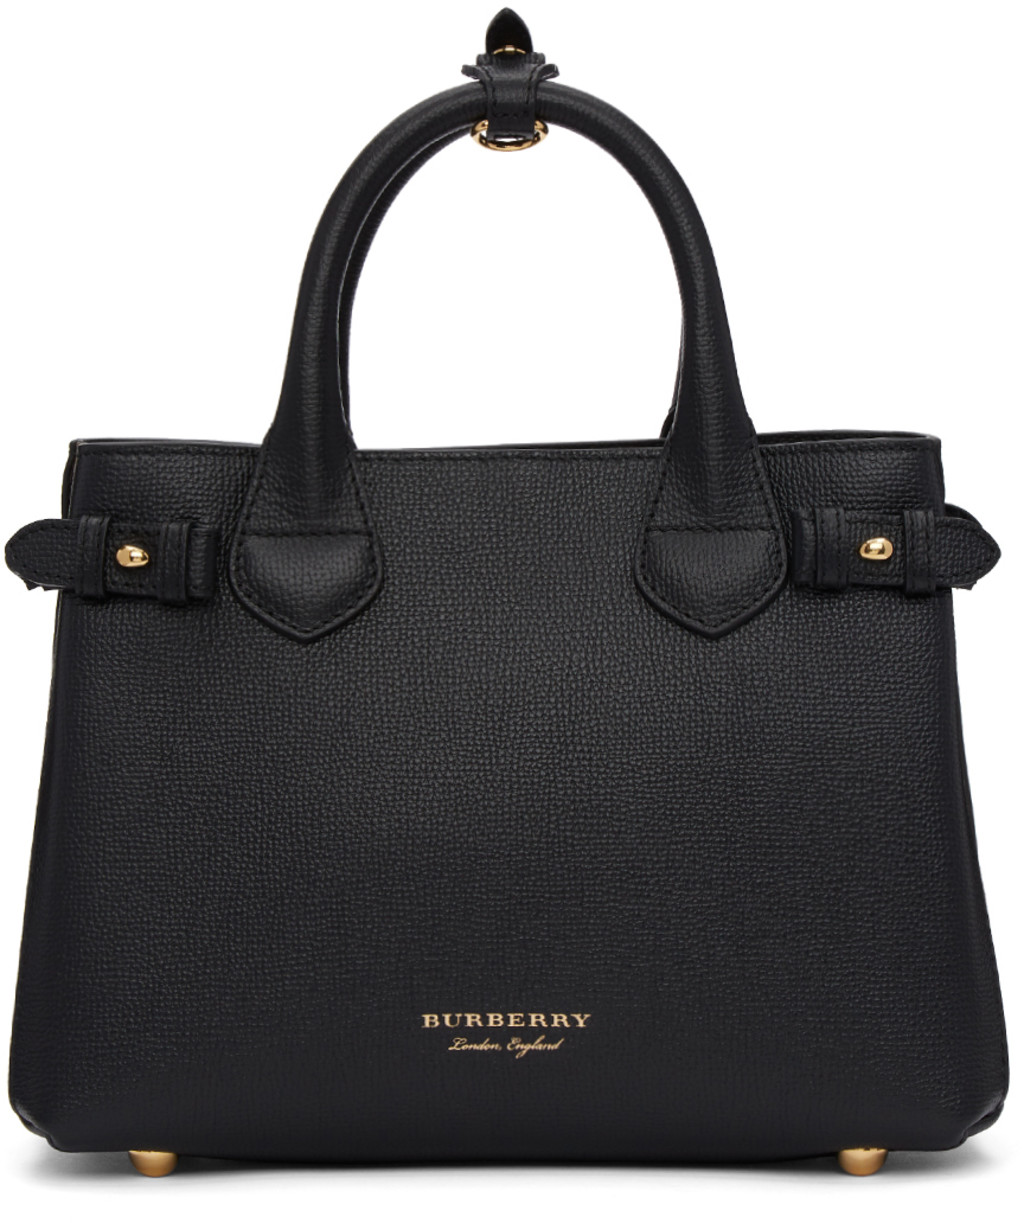 burberry bags 2014 price